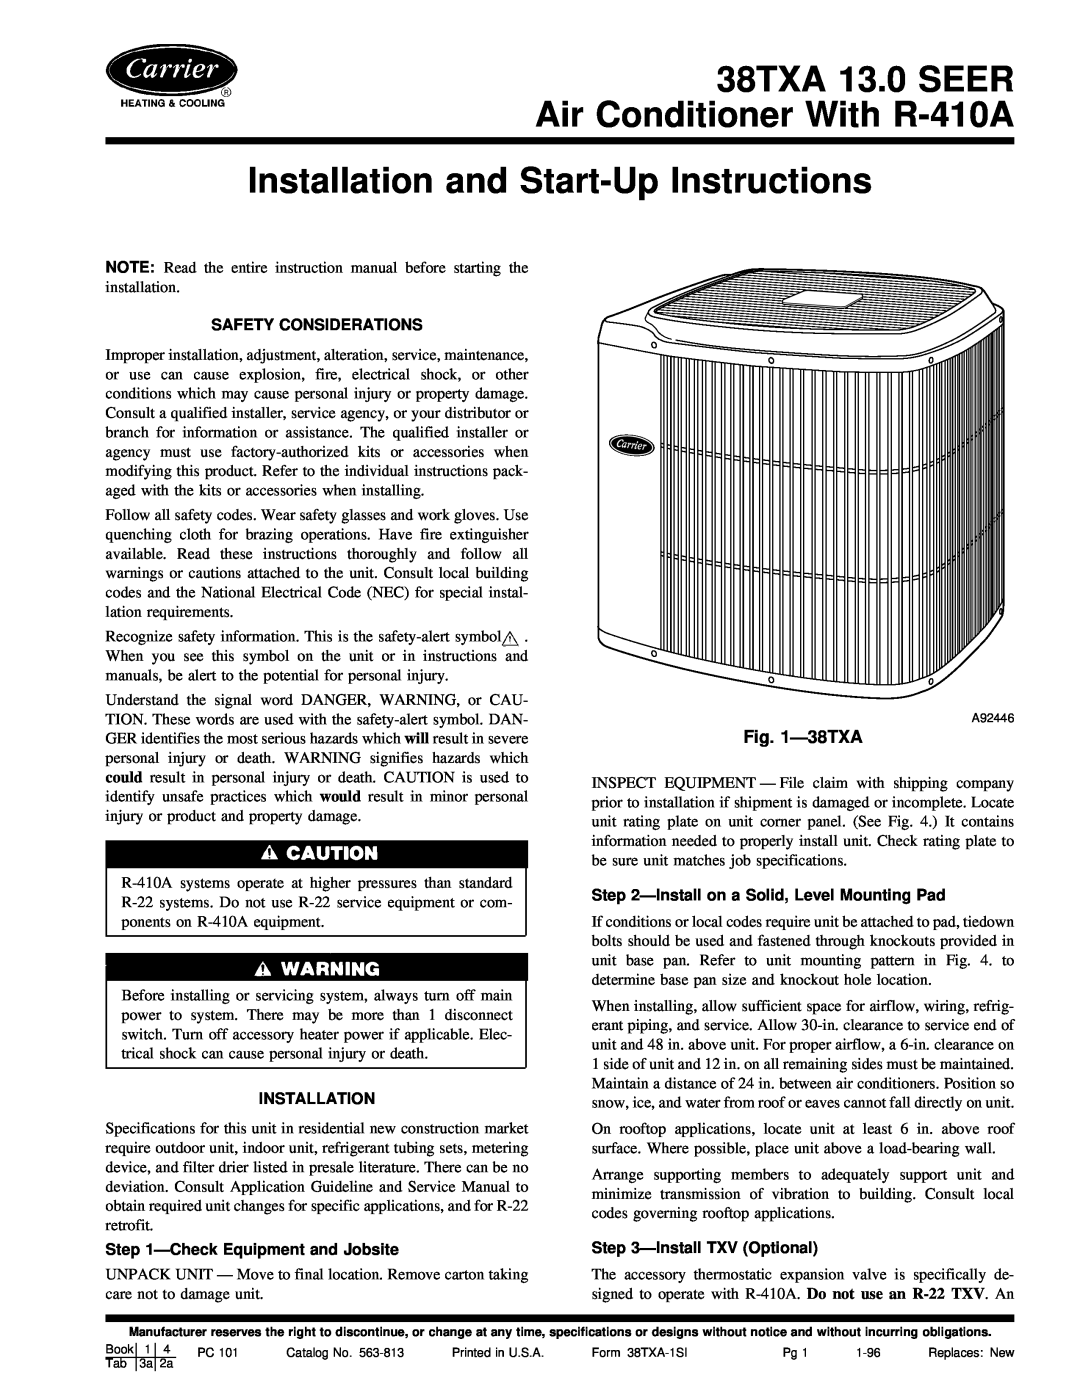 Carrier instruction manual Installation and Start-UpInstructions, 38TXA 13.0 SEER Air Conditioner With R-410A, Ð38TXA 